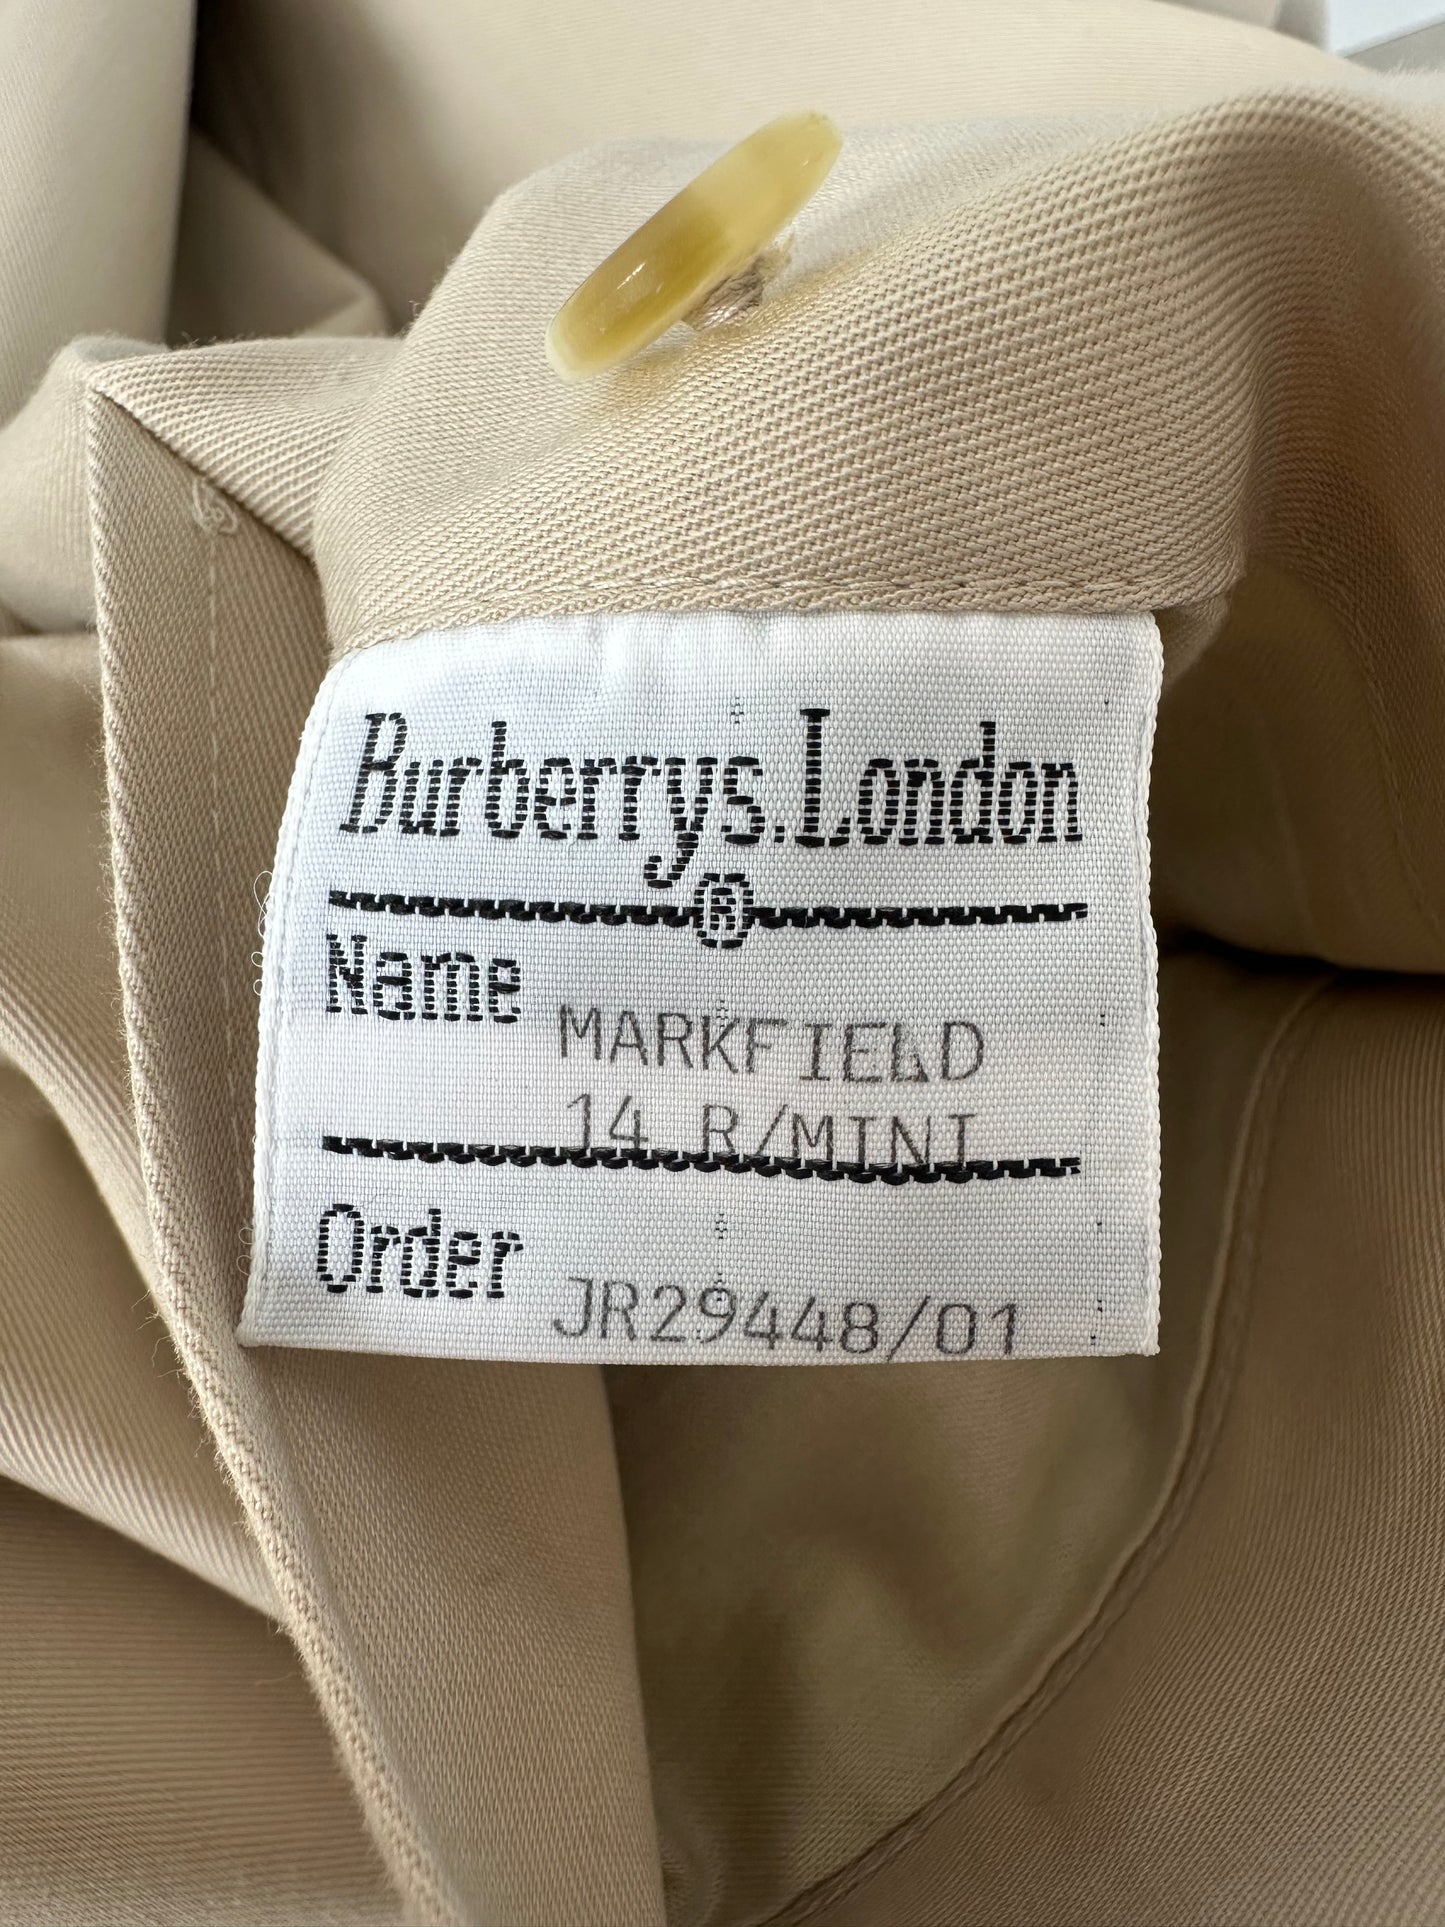 Trench-coat Burberry modèle “ Markfield“ beige vintage/ T.M